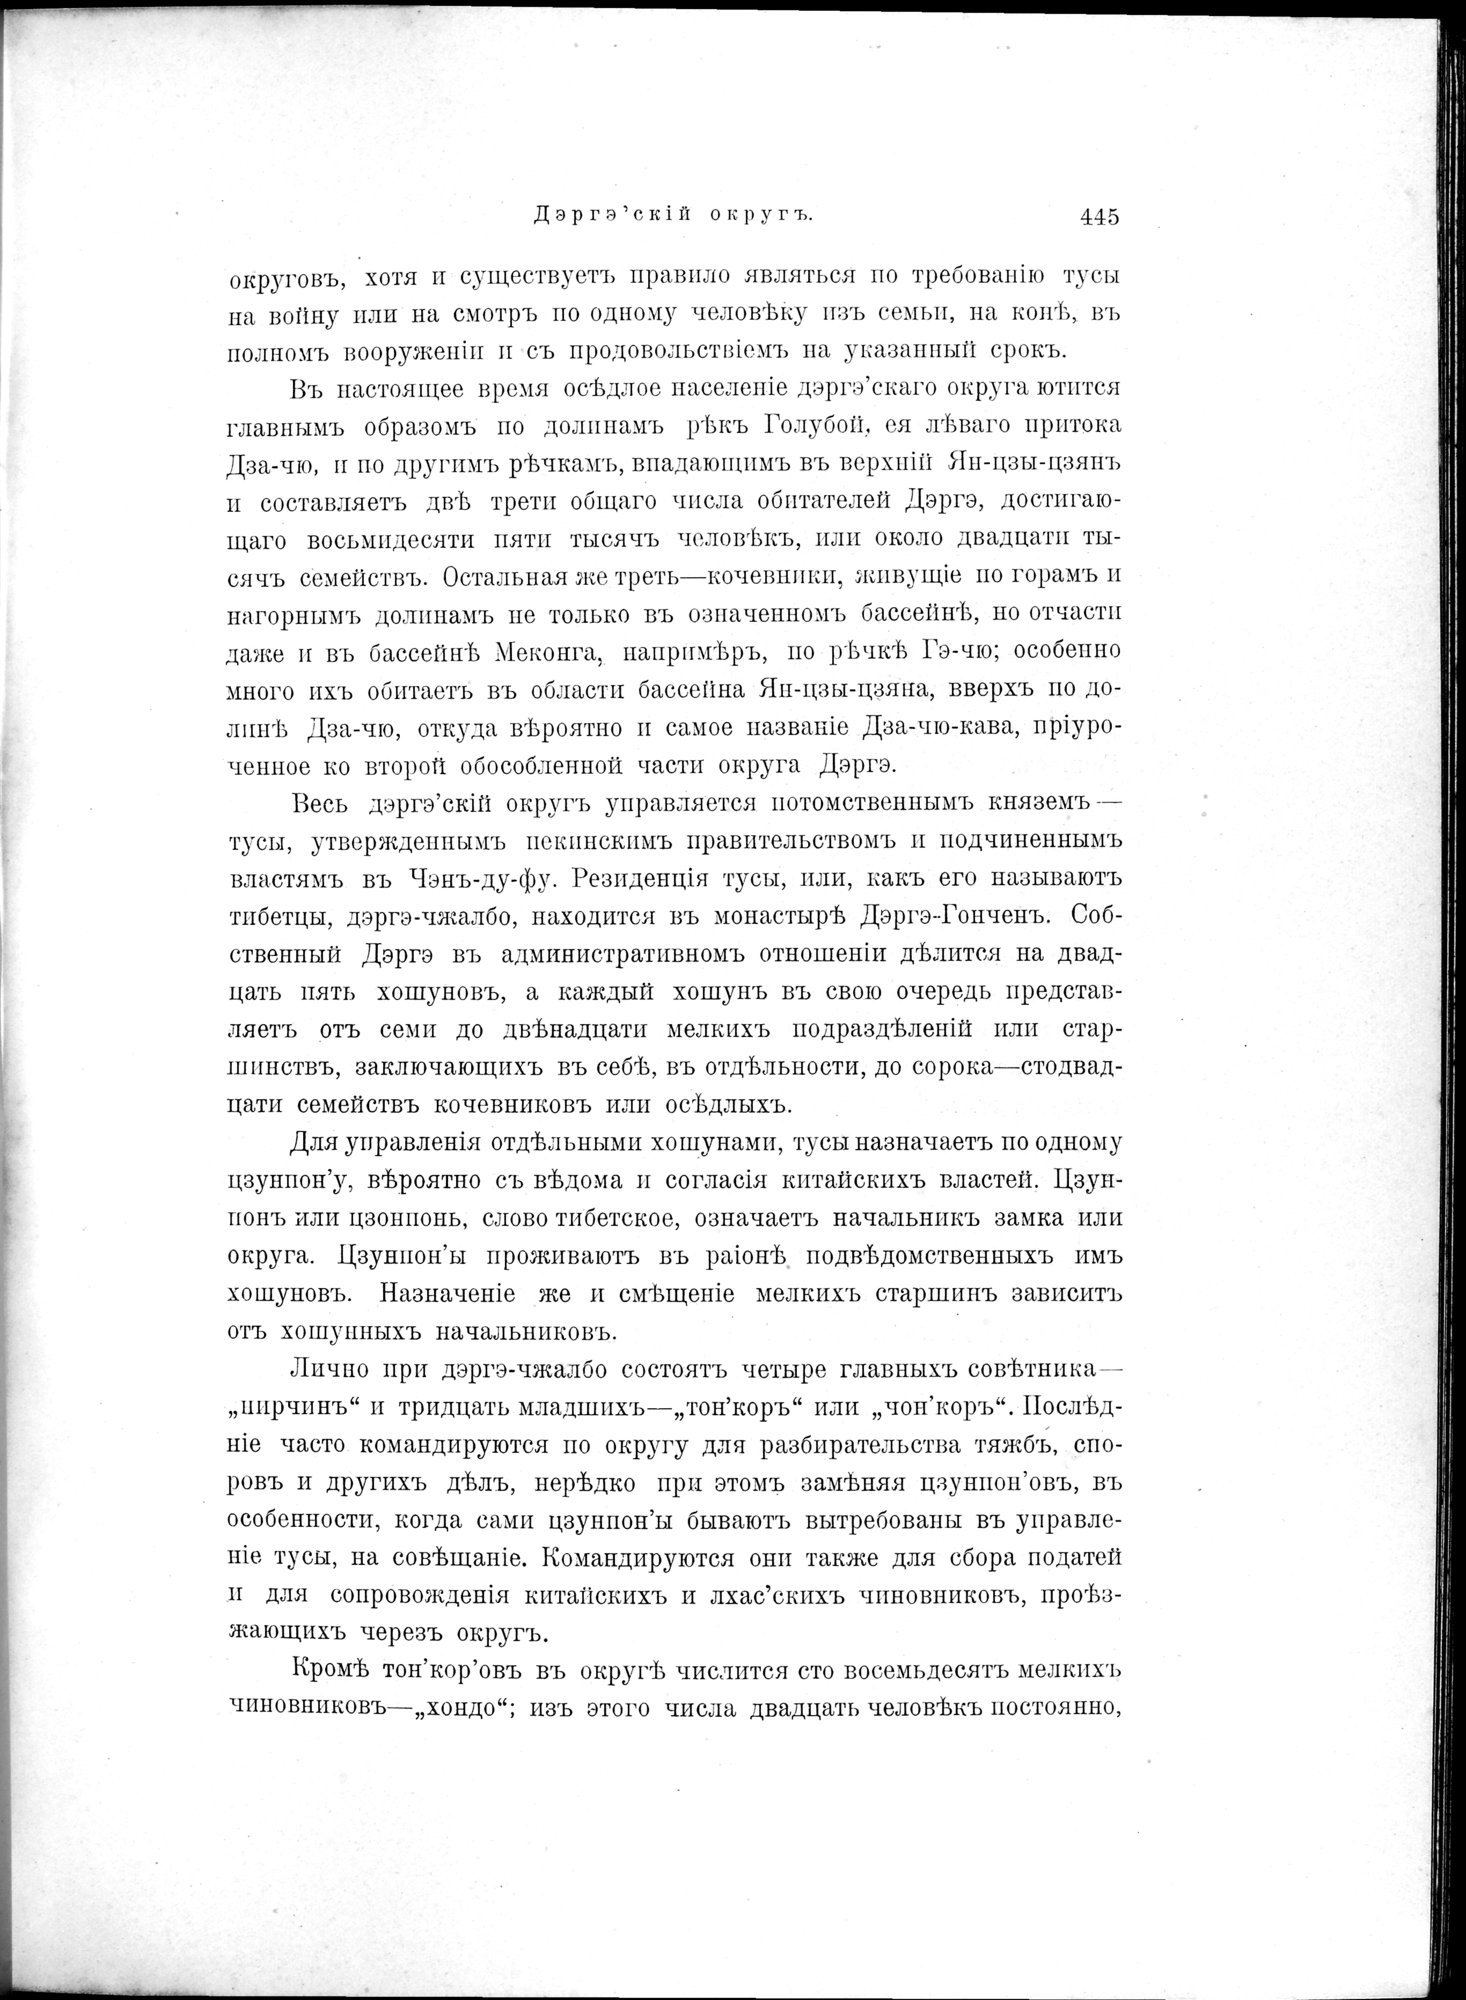 Mongoliia i Kam : vol.2 / Page 245 (Grayscale High Resolution Image)